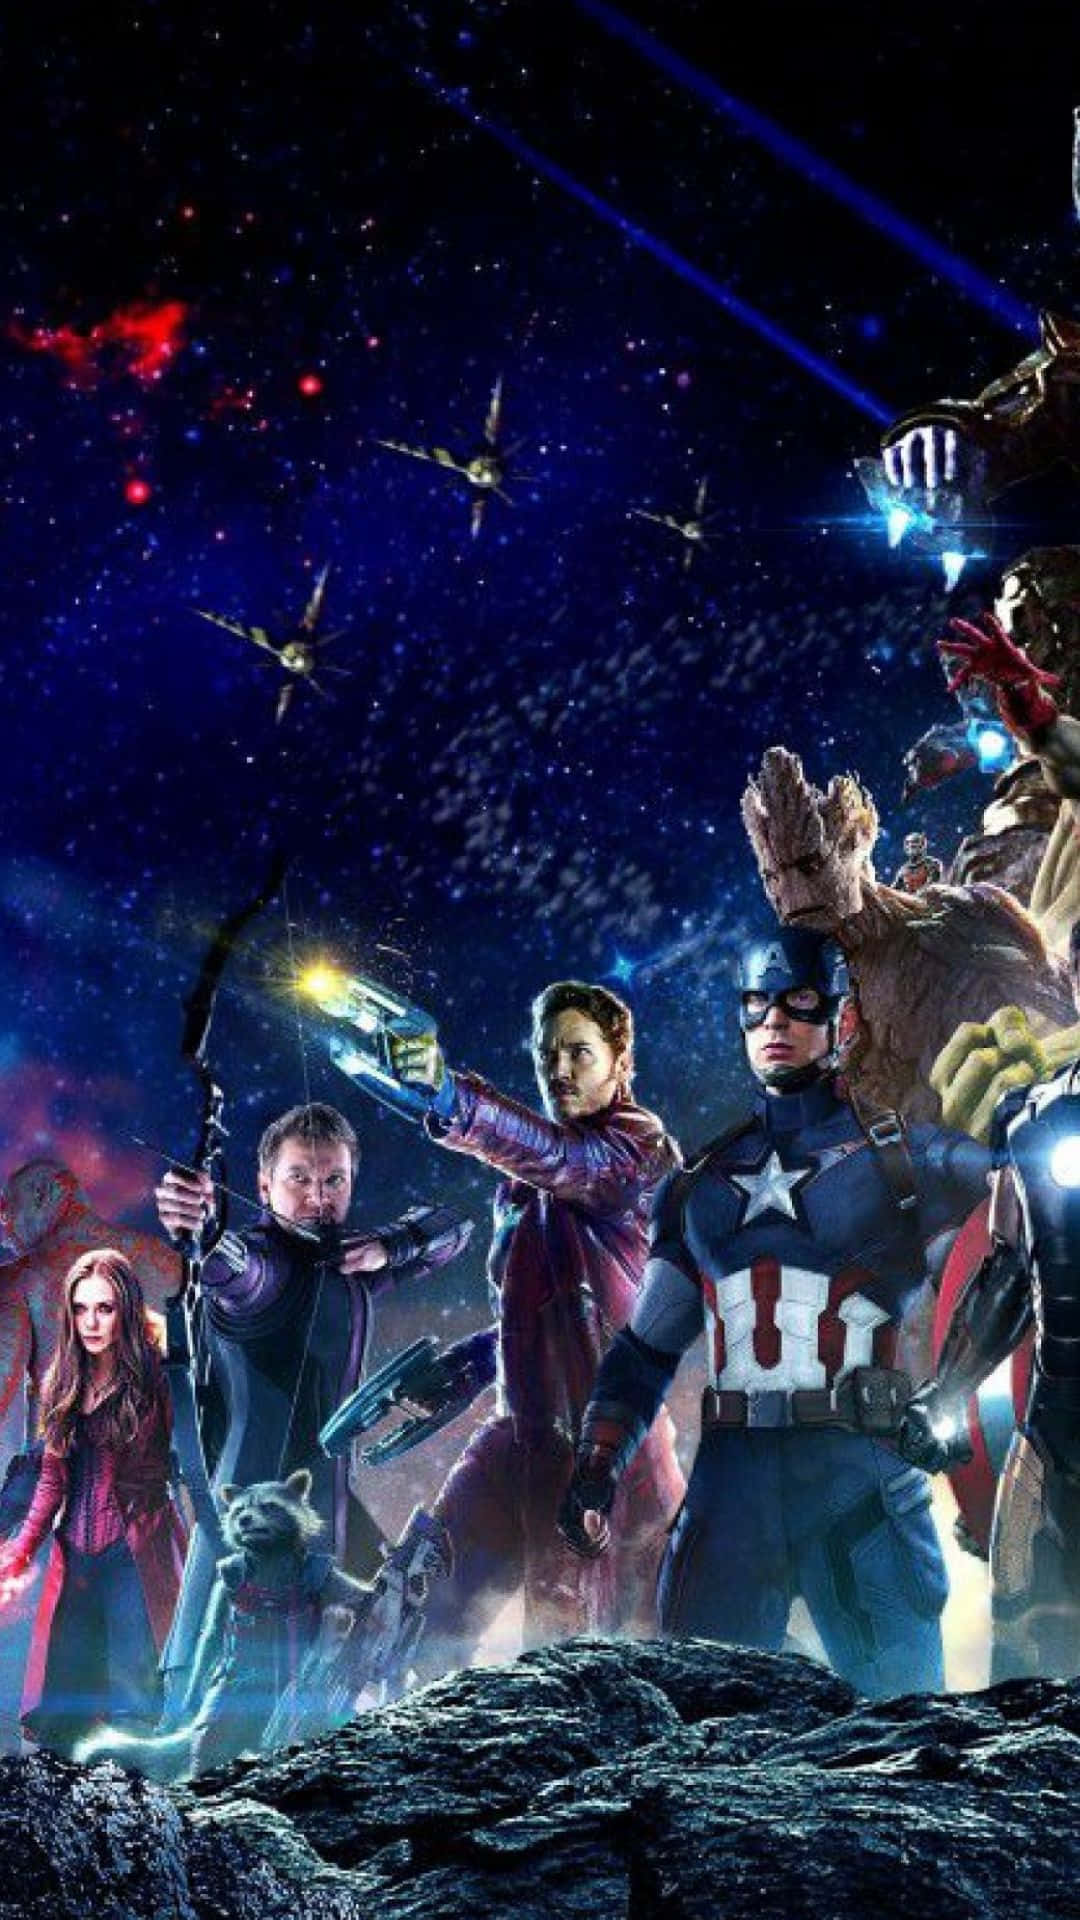 Fondode Pantalla Android De Marvel's Avengers En El Espacio